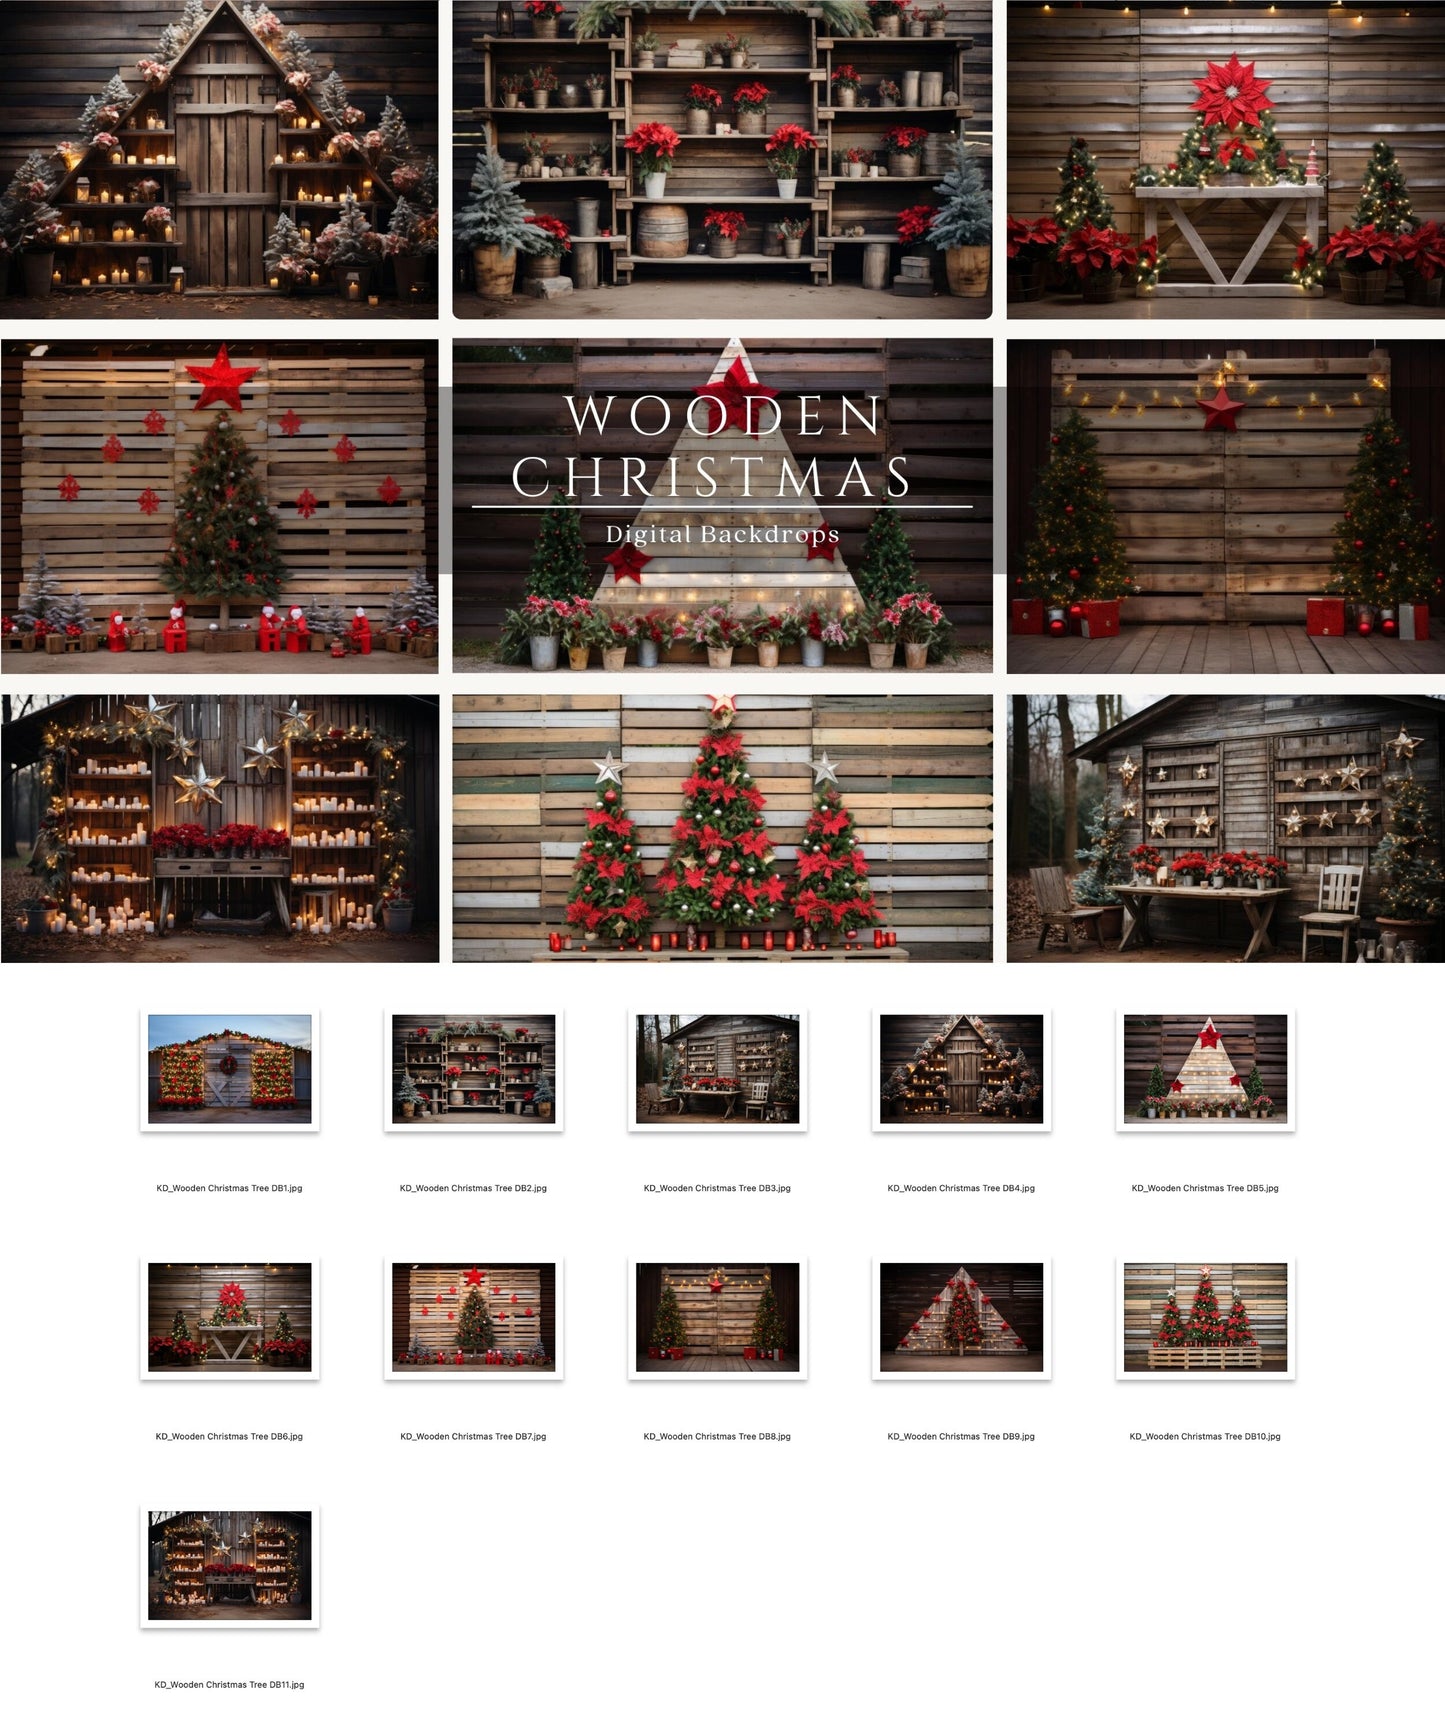 Christmas Wooden Tree Decor Digital Backdrops